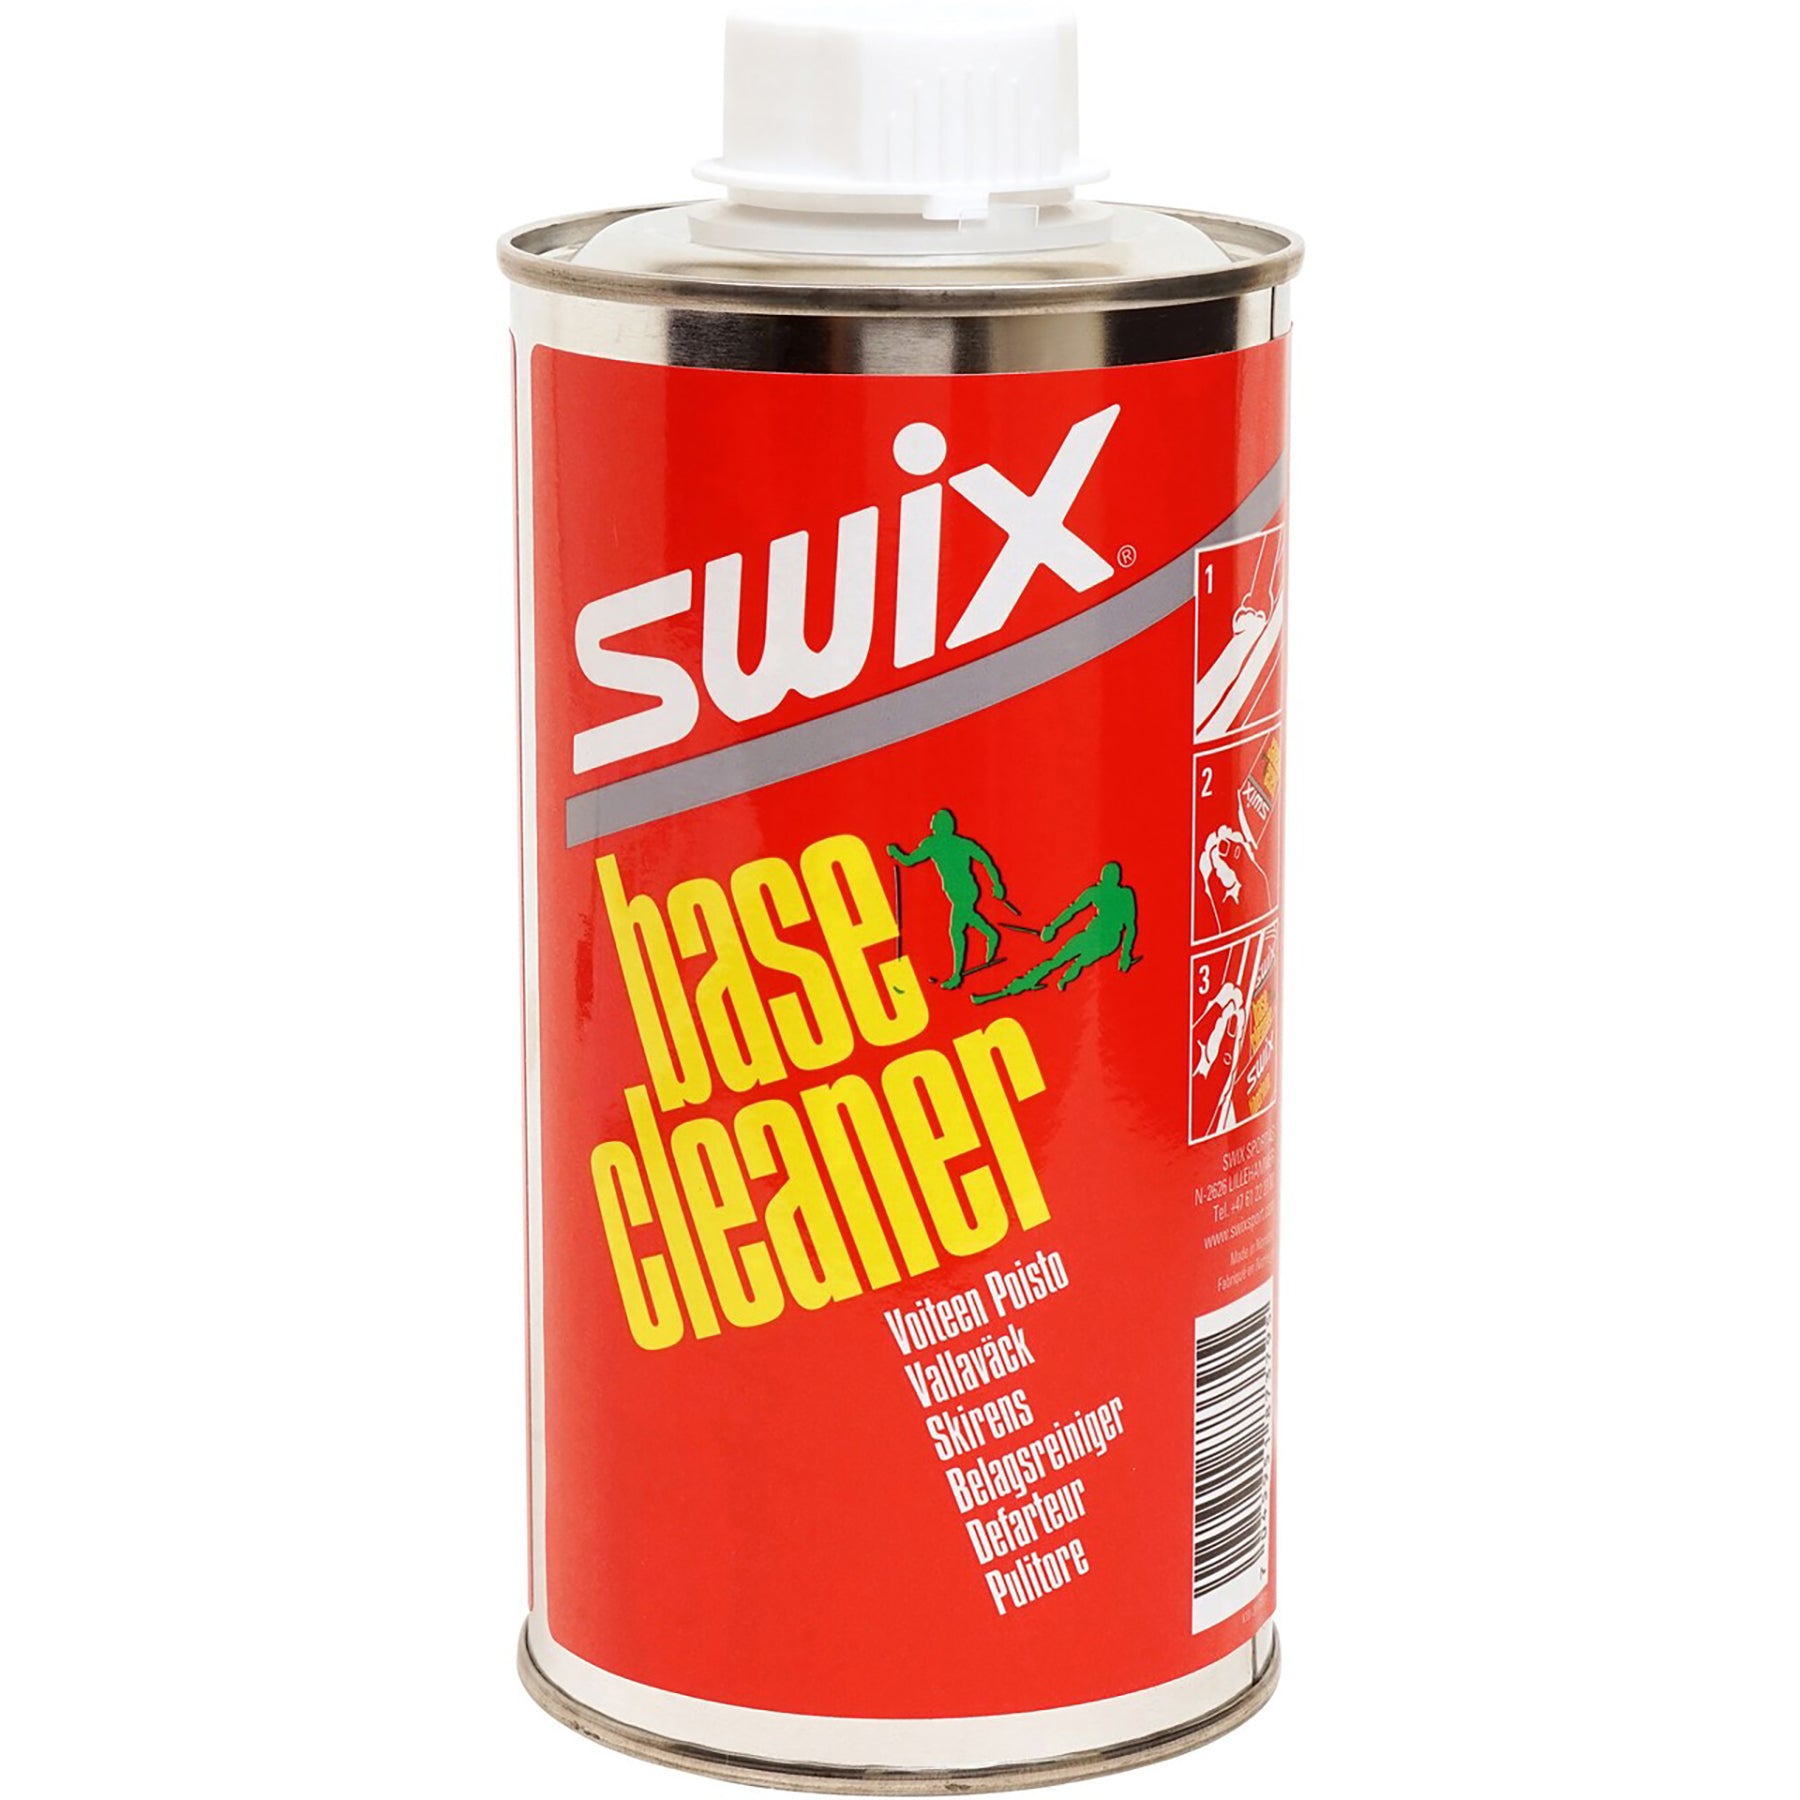 Swix Base Cleaner I64C